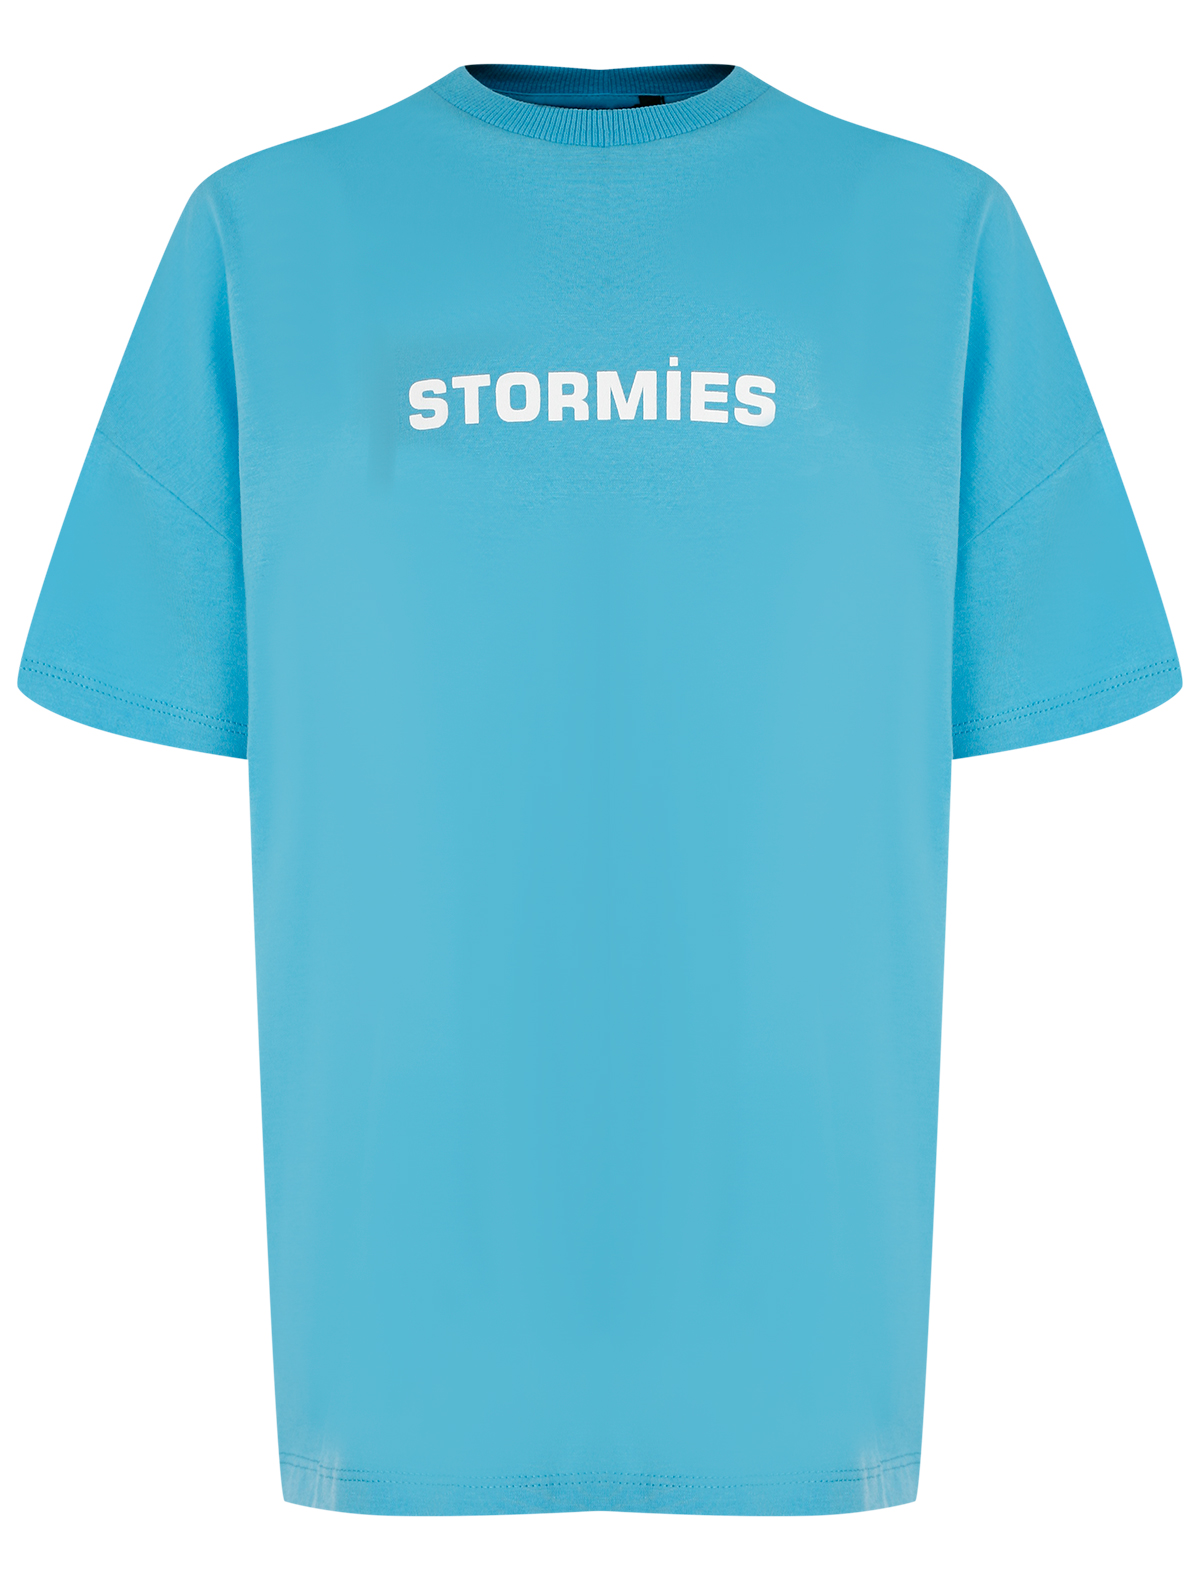 Футболка Stormies 2615508, цвет синий, размер 9